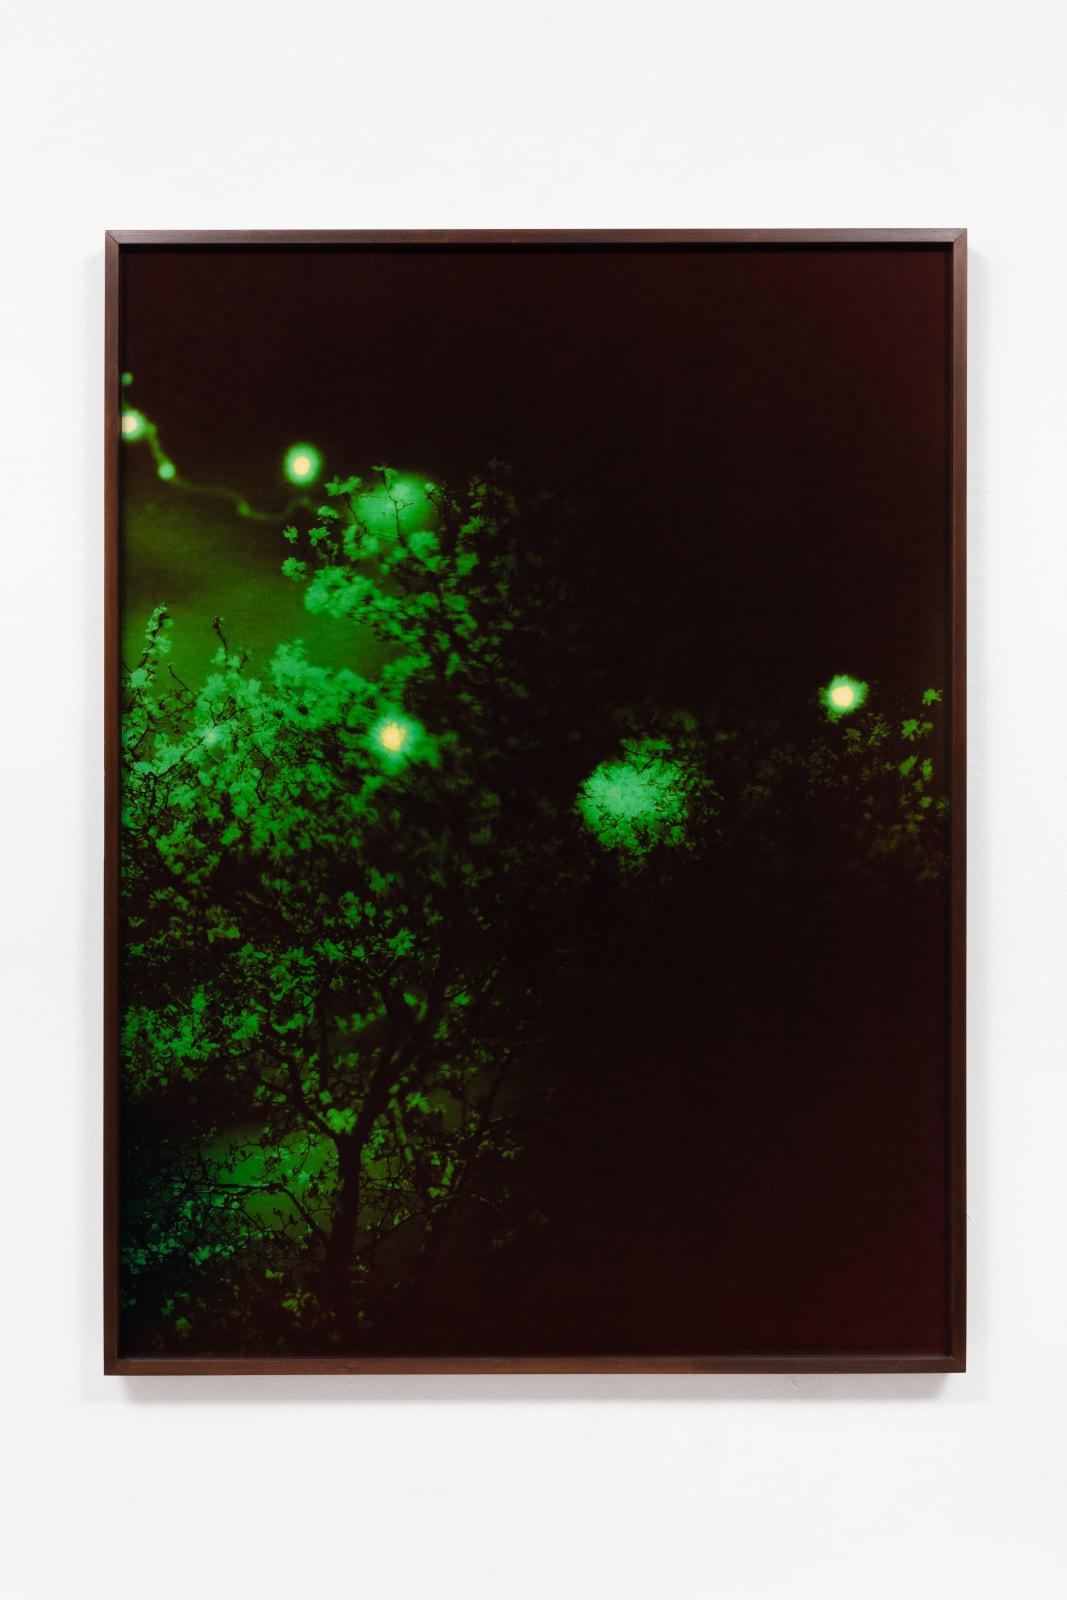 André Feliciano, vaga-lumes fotográficos, série prospect park 3, 2020